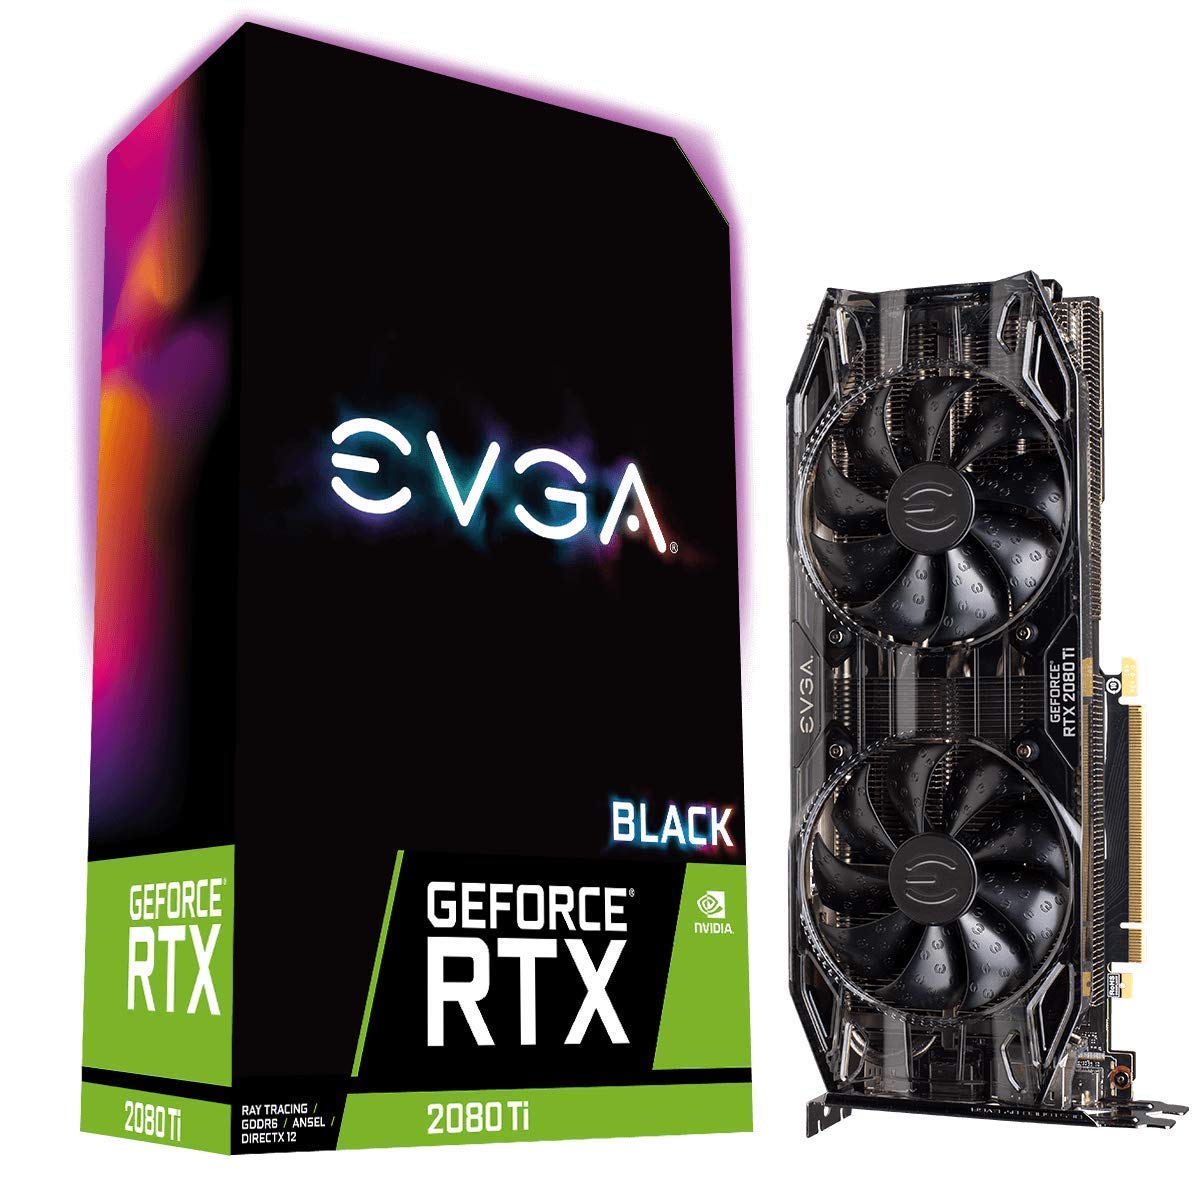 EVGA GeForce RTX 2080 Ti Black Edition Gaming, 11GB GDDR6, Dual HDB Fans  and RGB LED Graphics Card 11G-P4-2281-KR (Renewed)